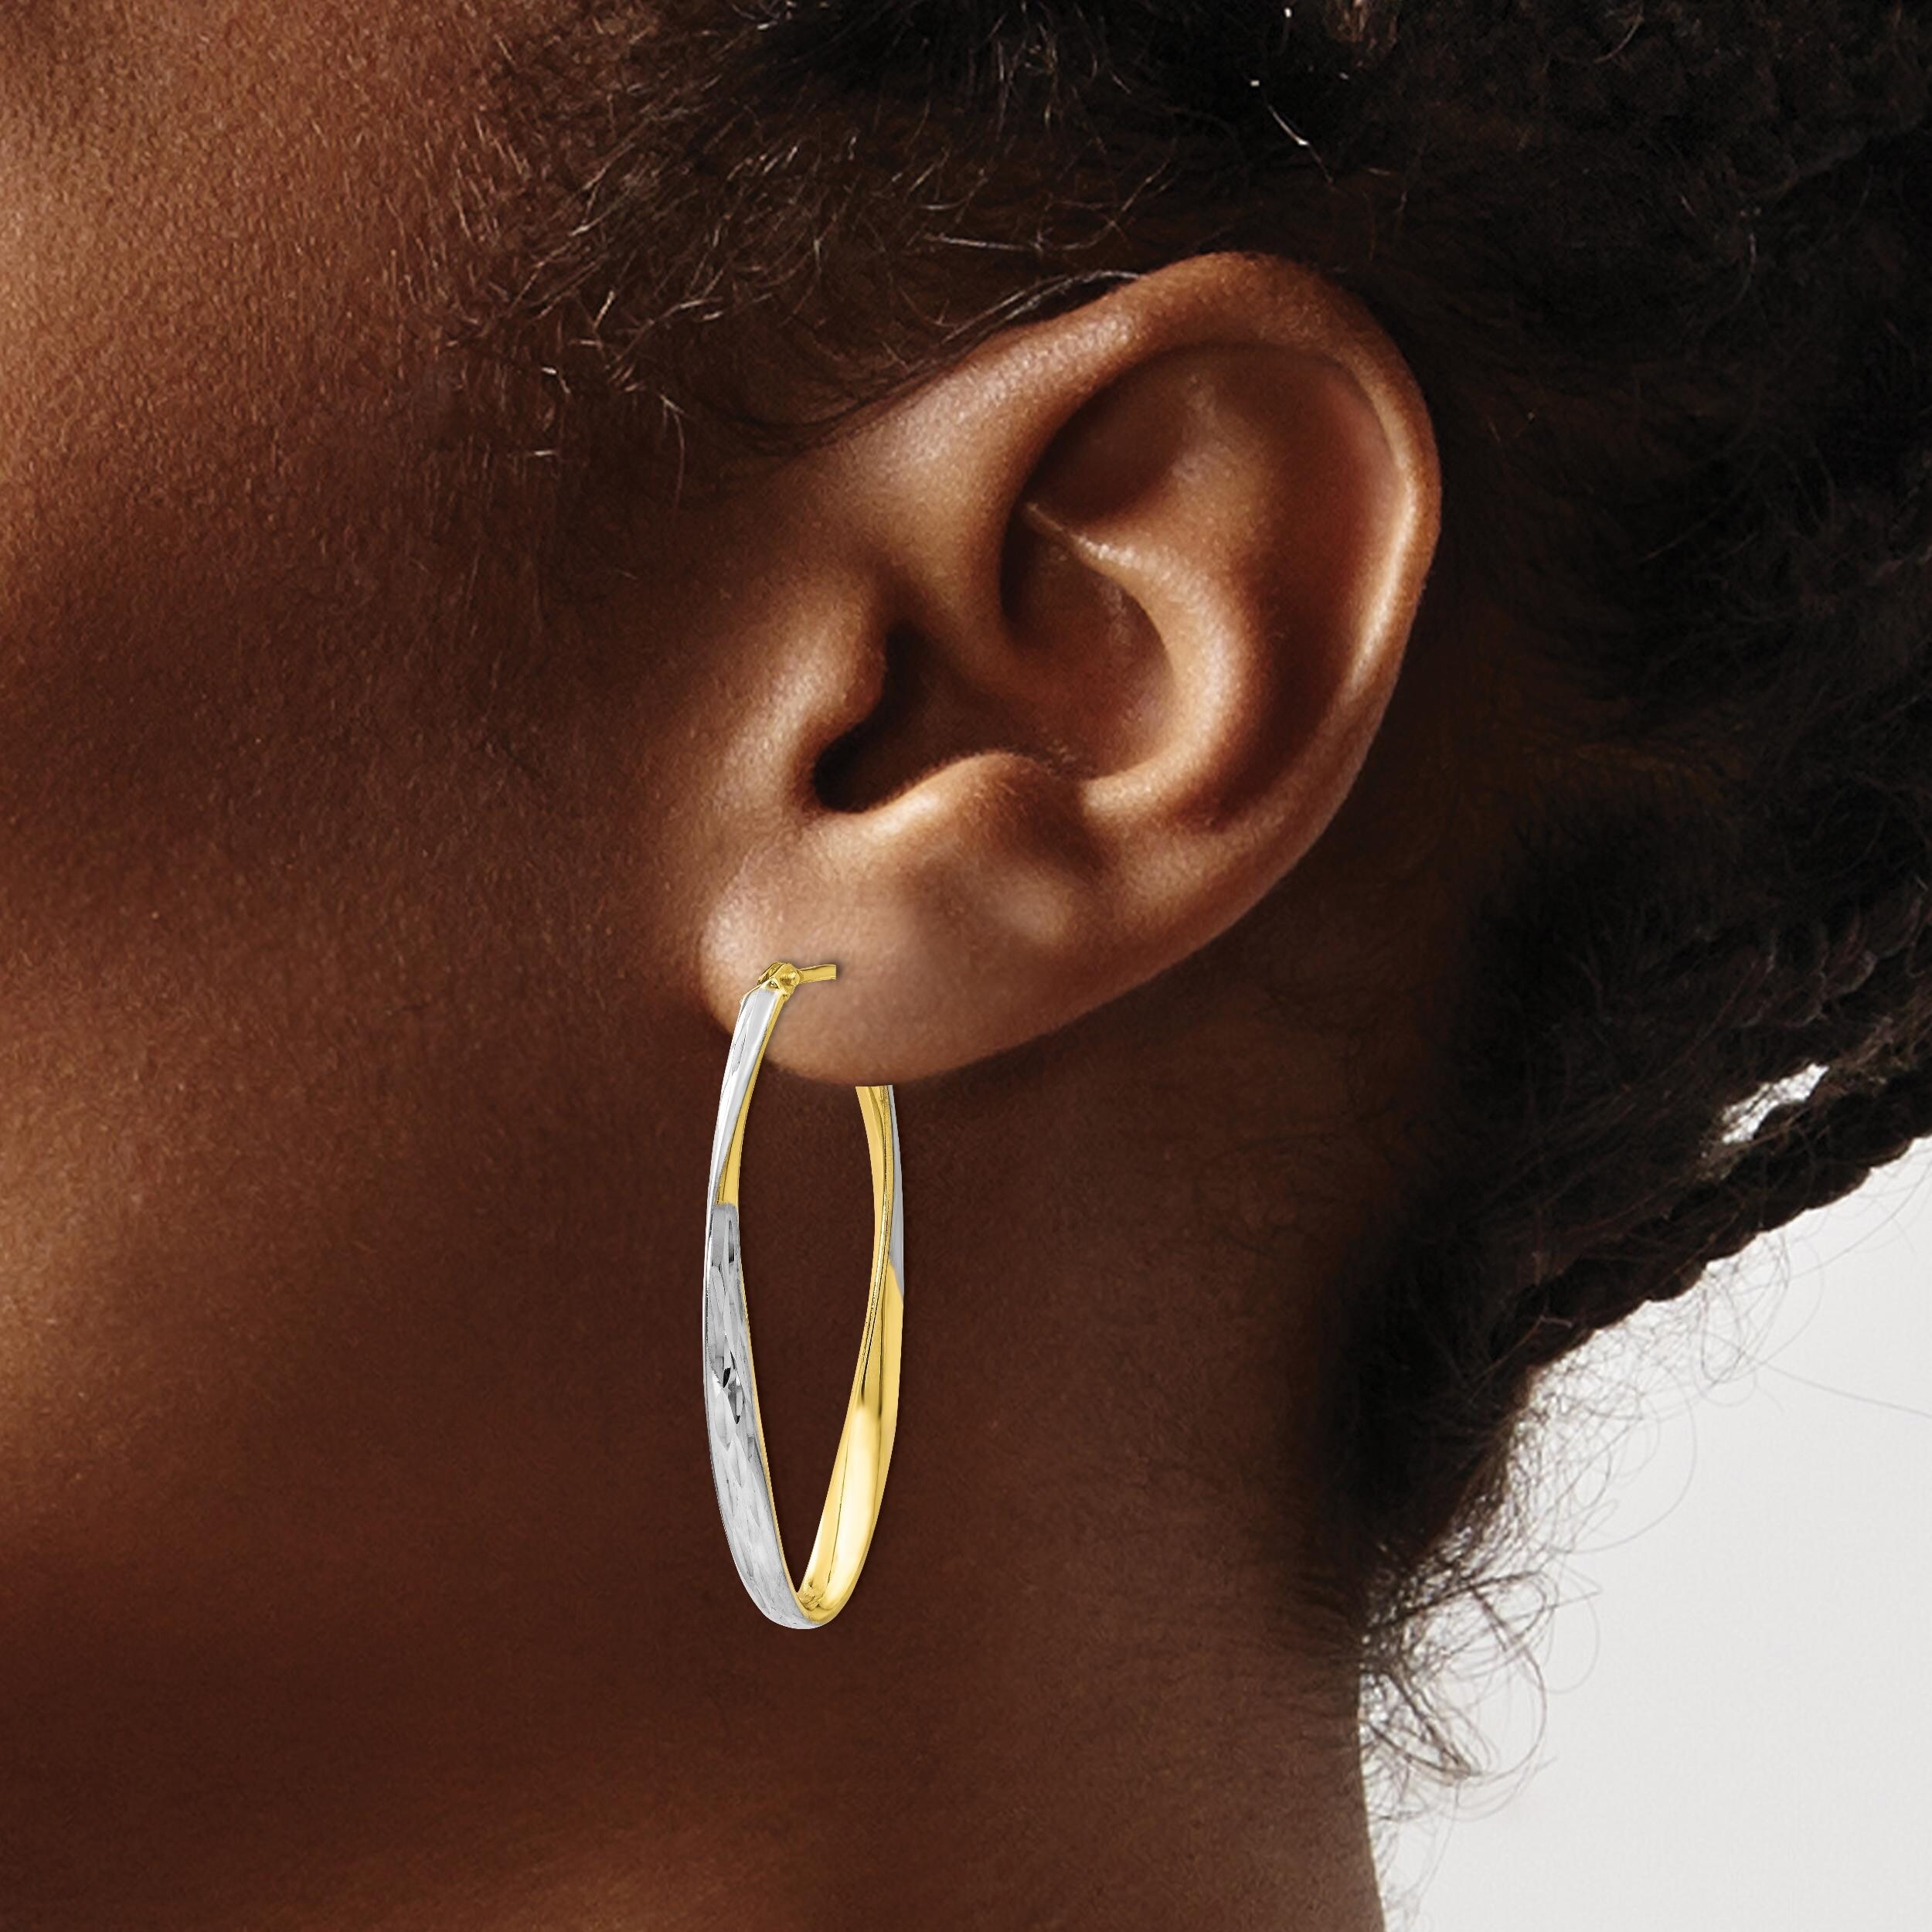 Mia Diamonds 14k White Gold 2.5mm Textured Round Hoop Earrings 25mm x 3mm 